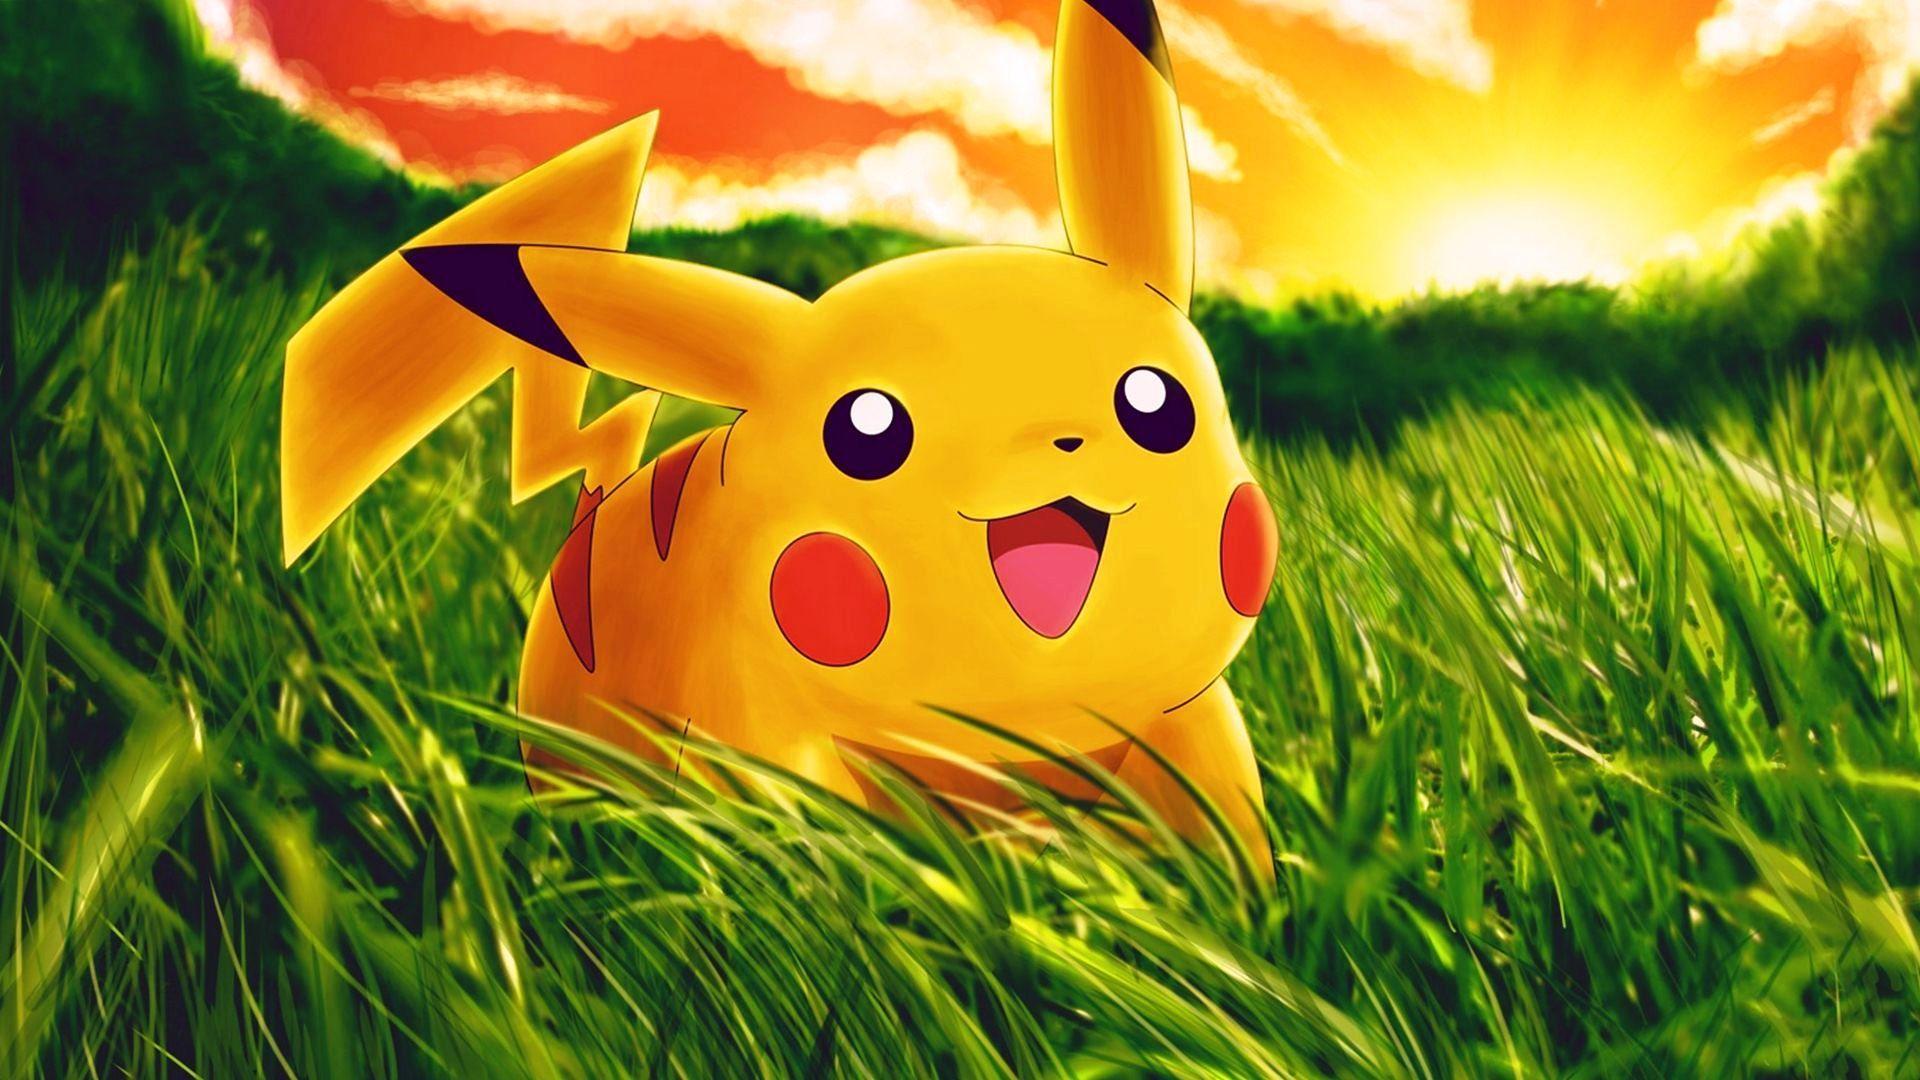 Cute Pokemon Wallpaper Pikachu Photo HD Pics For Mobile Phones